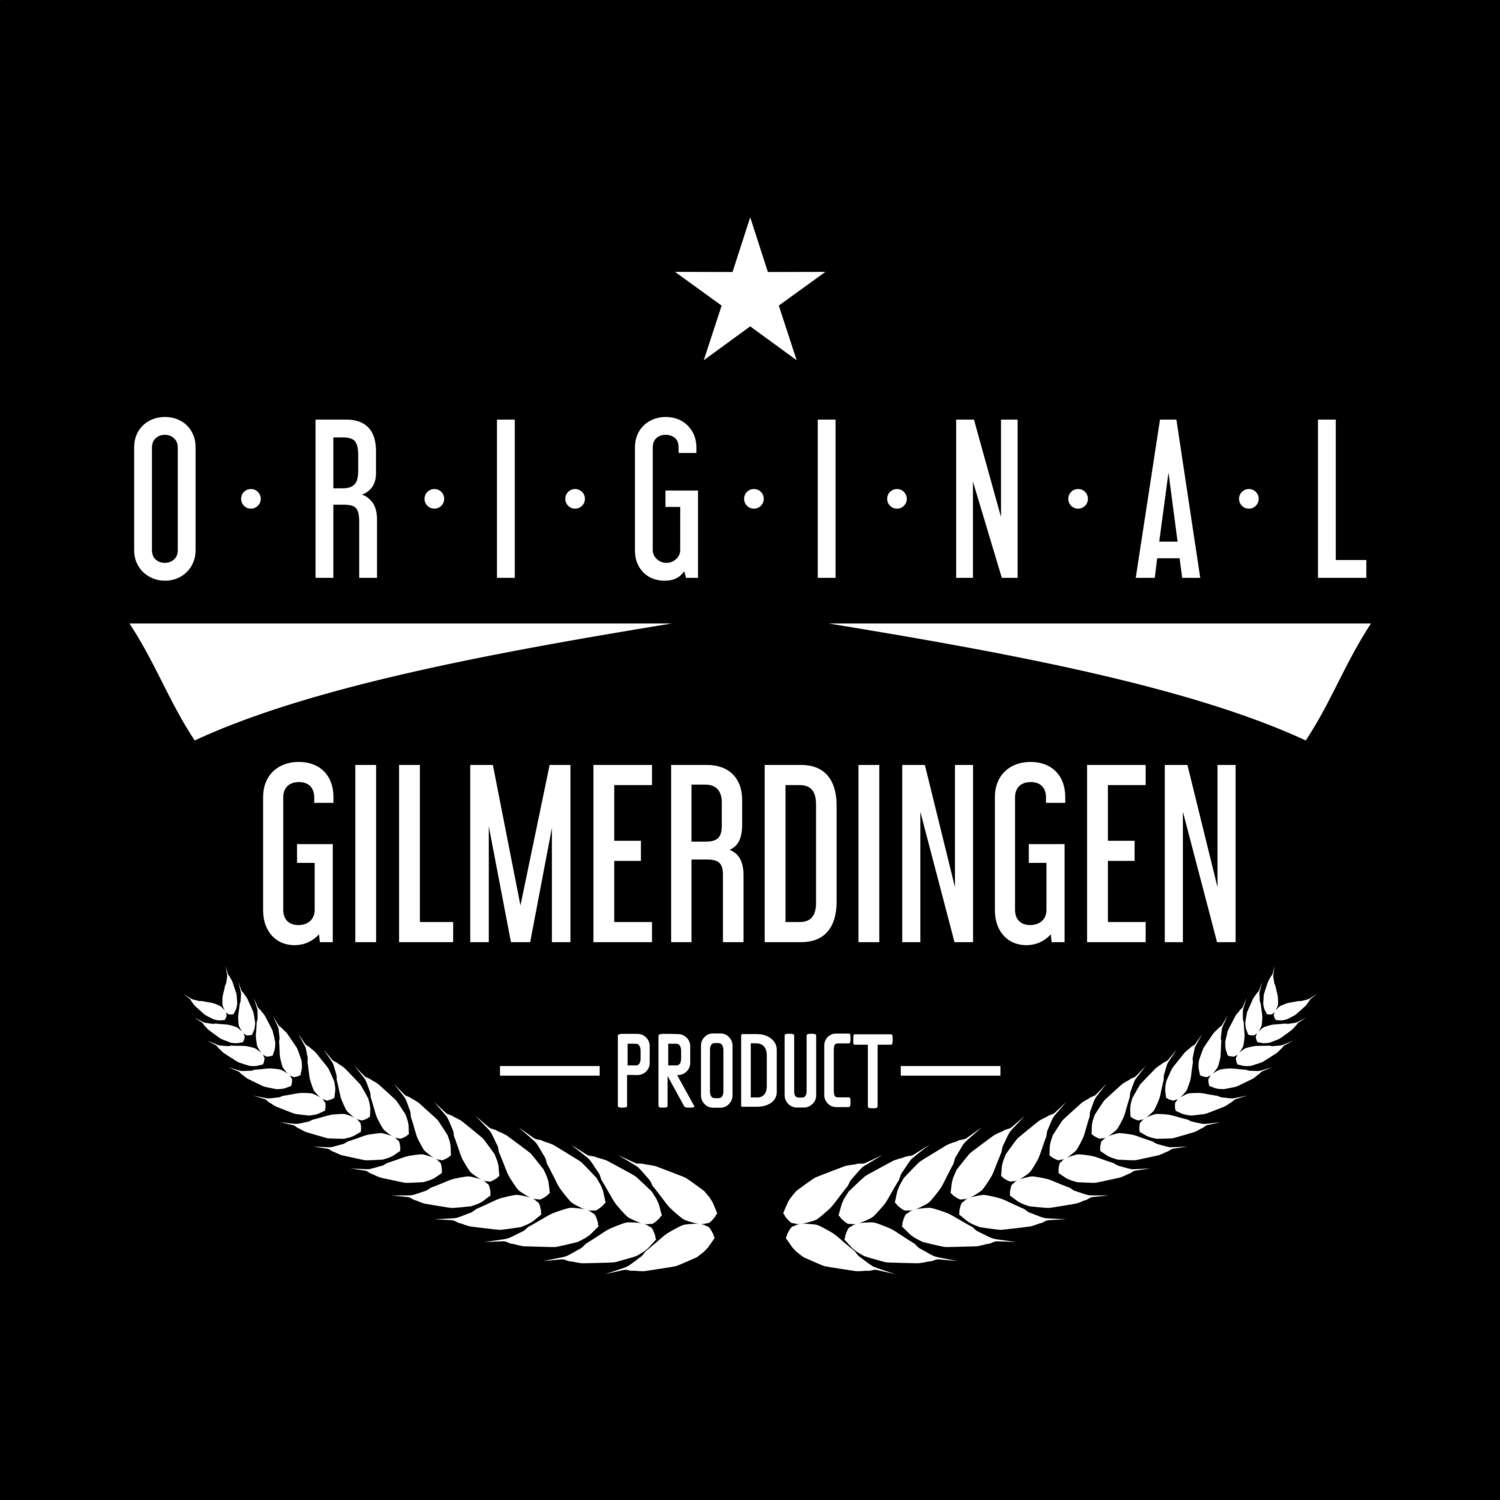 Gilmerdingen T-Shirt »Original Product«